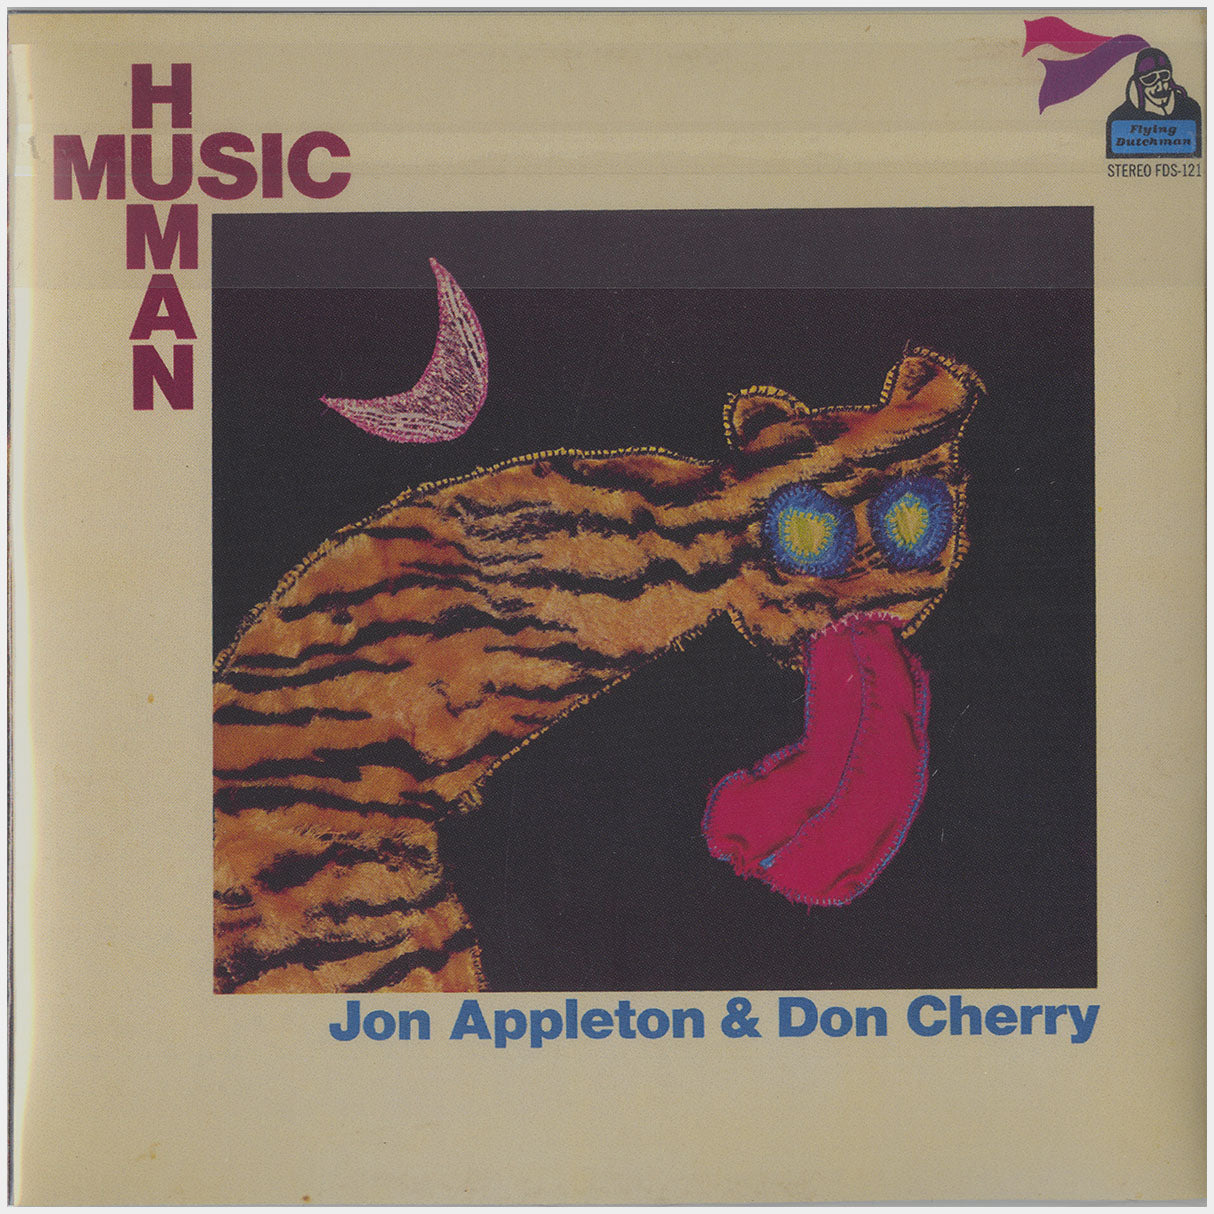 [CP 046 CD] Jon Appleton, Don Cherry; Appleton Syntonic Menagerie, Human Music